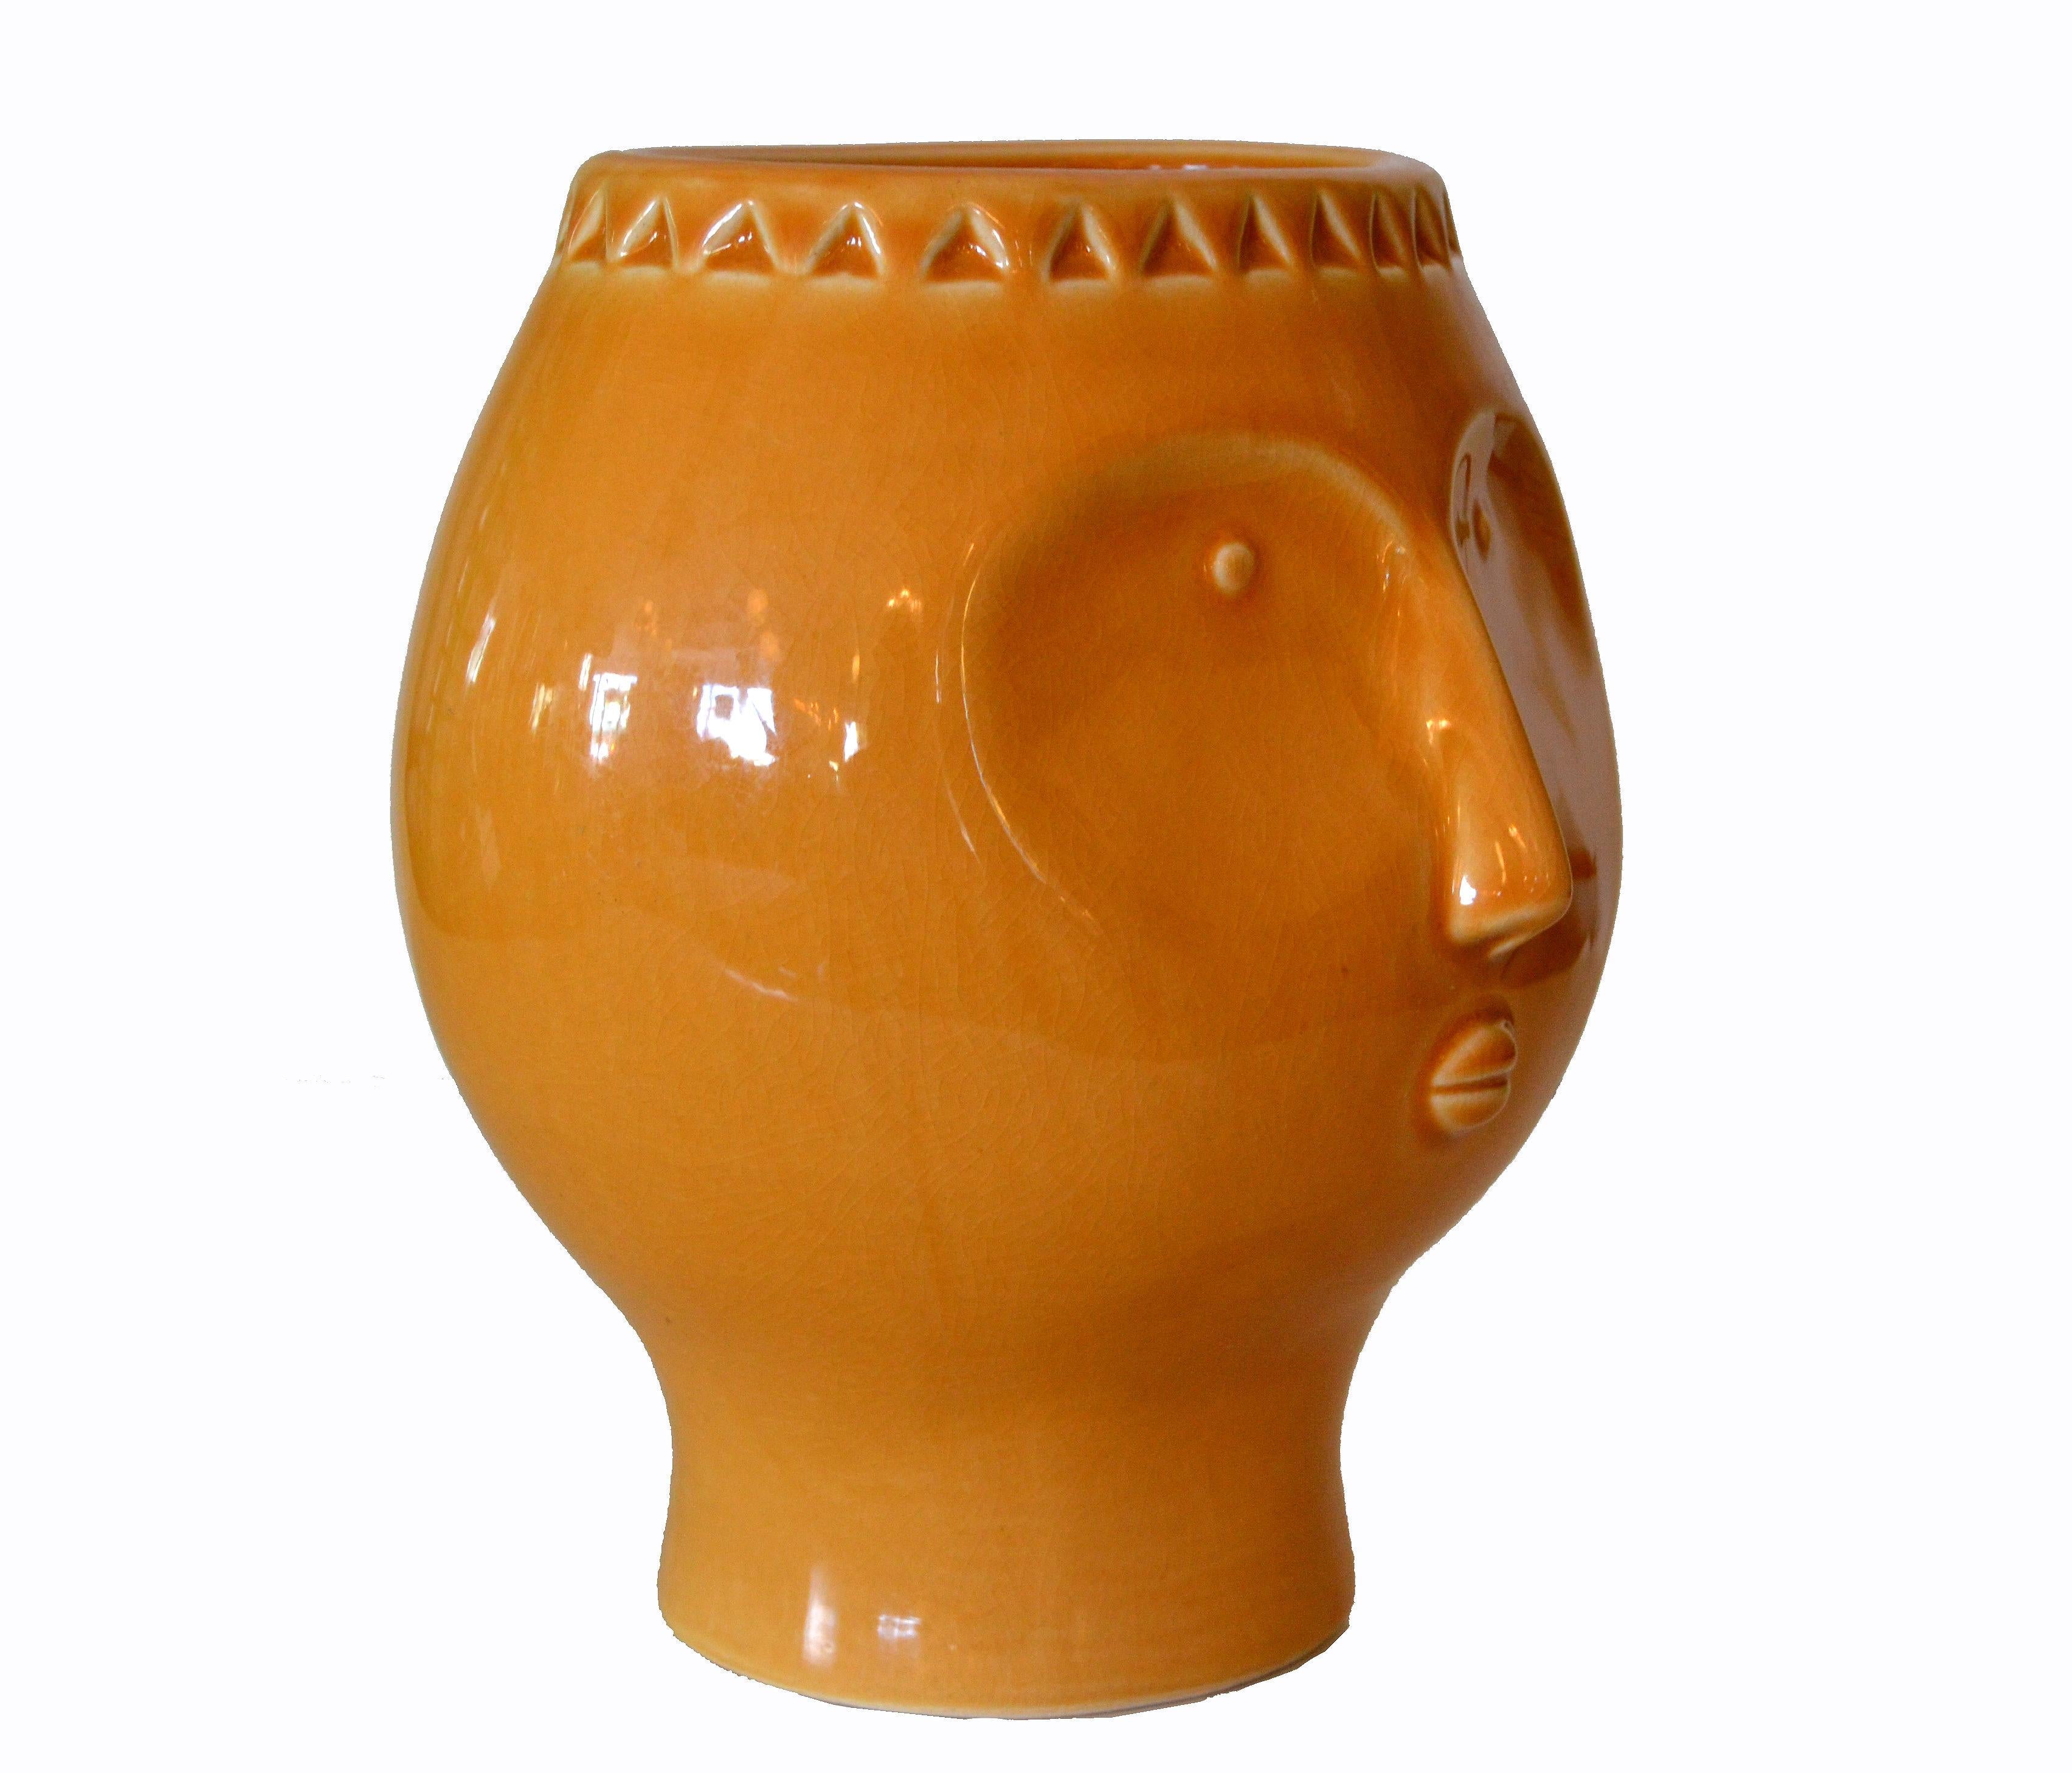 Mid-Century Modern perpetual glazed beige ceramic face vase, head sculpture vessel.
No markings.